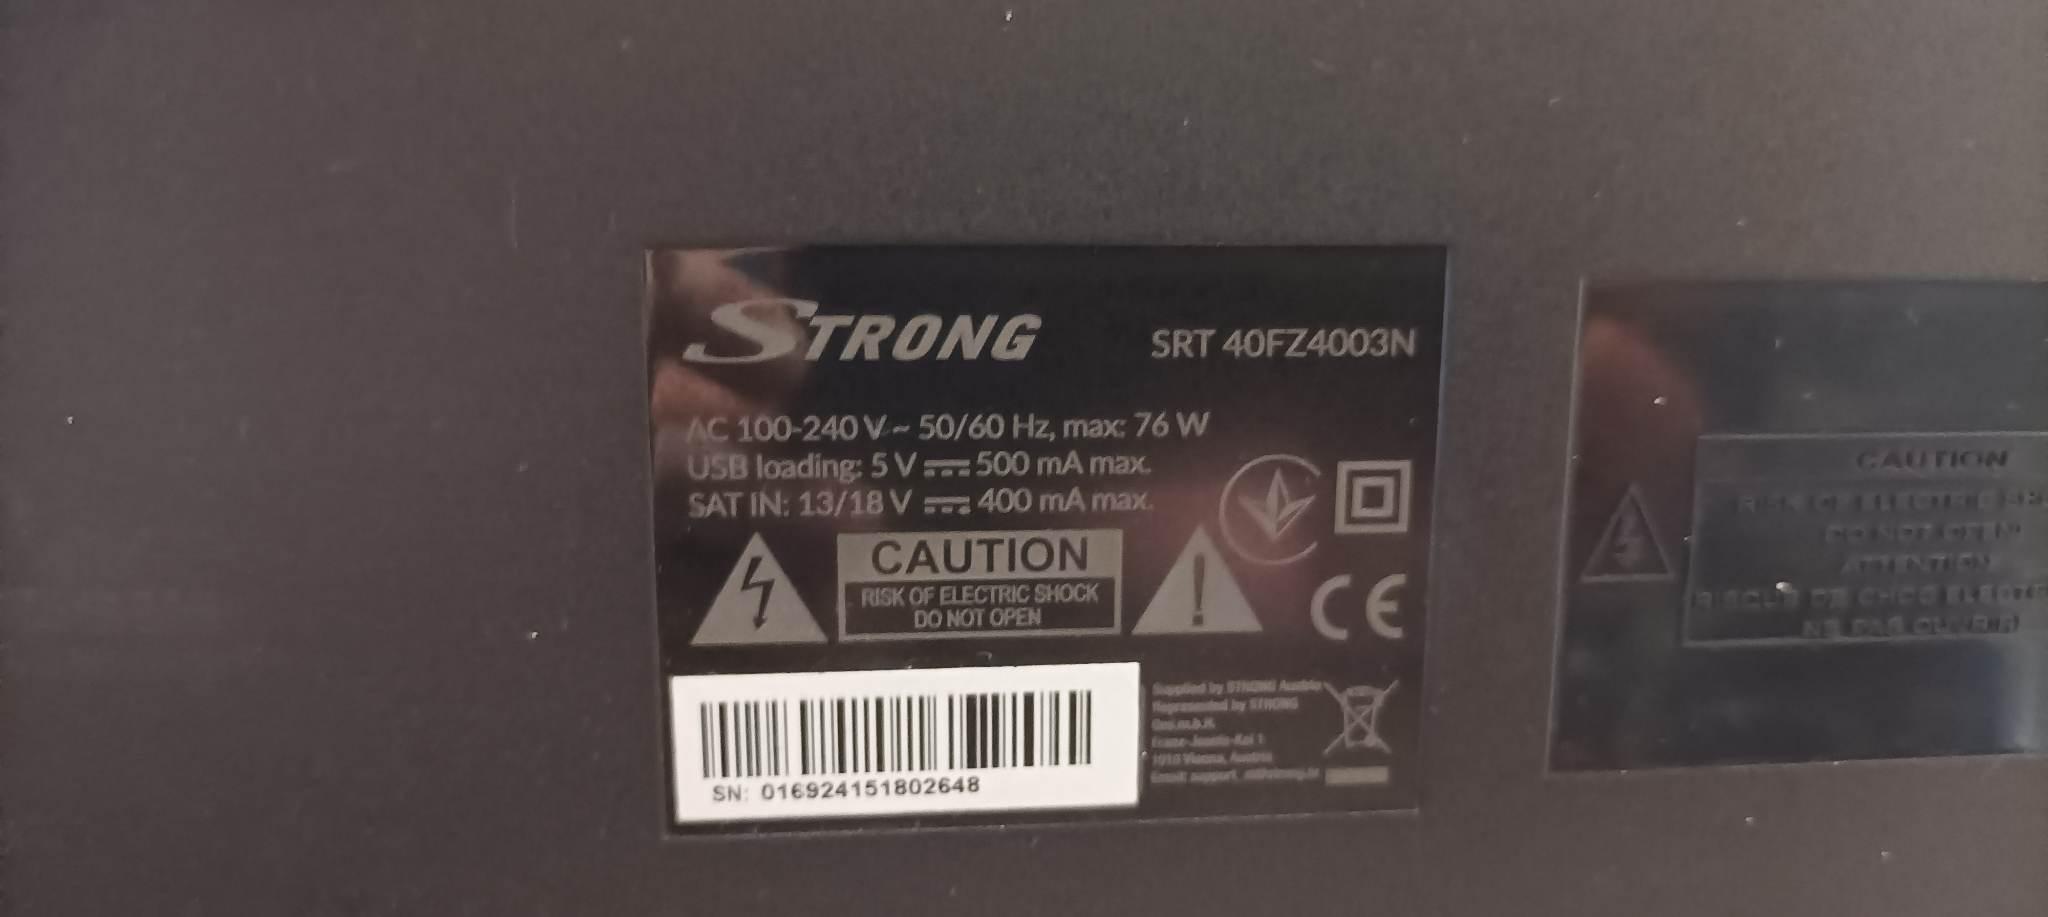 Televizor Strong SRT 40FZ4003N image 5